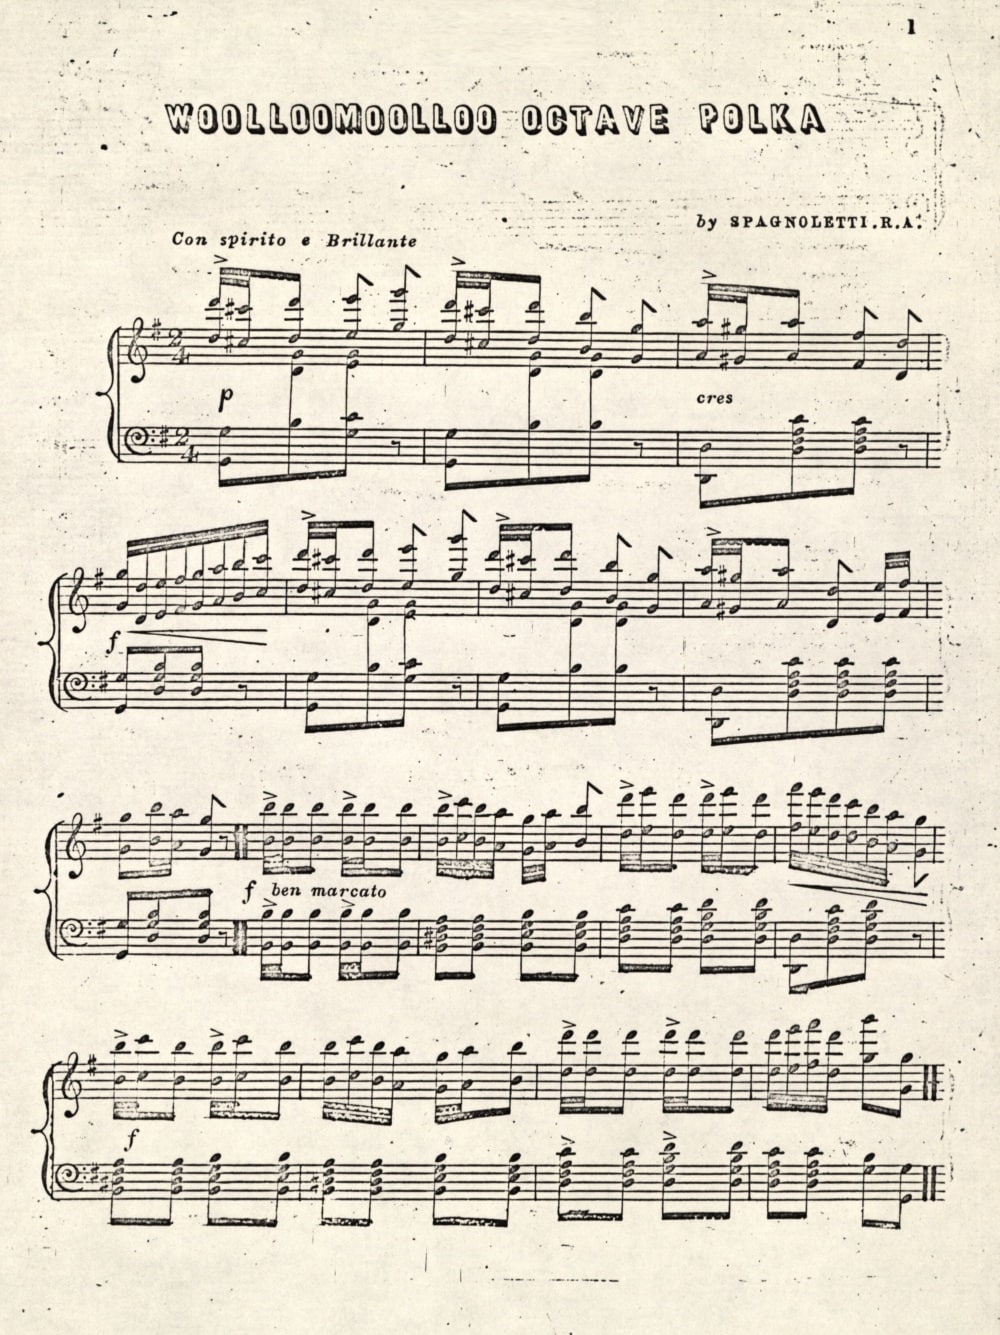 The Woolloomooloo octave polka, by E. Spagnoletti senior (Sydney, 1858)